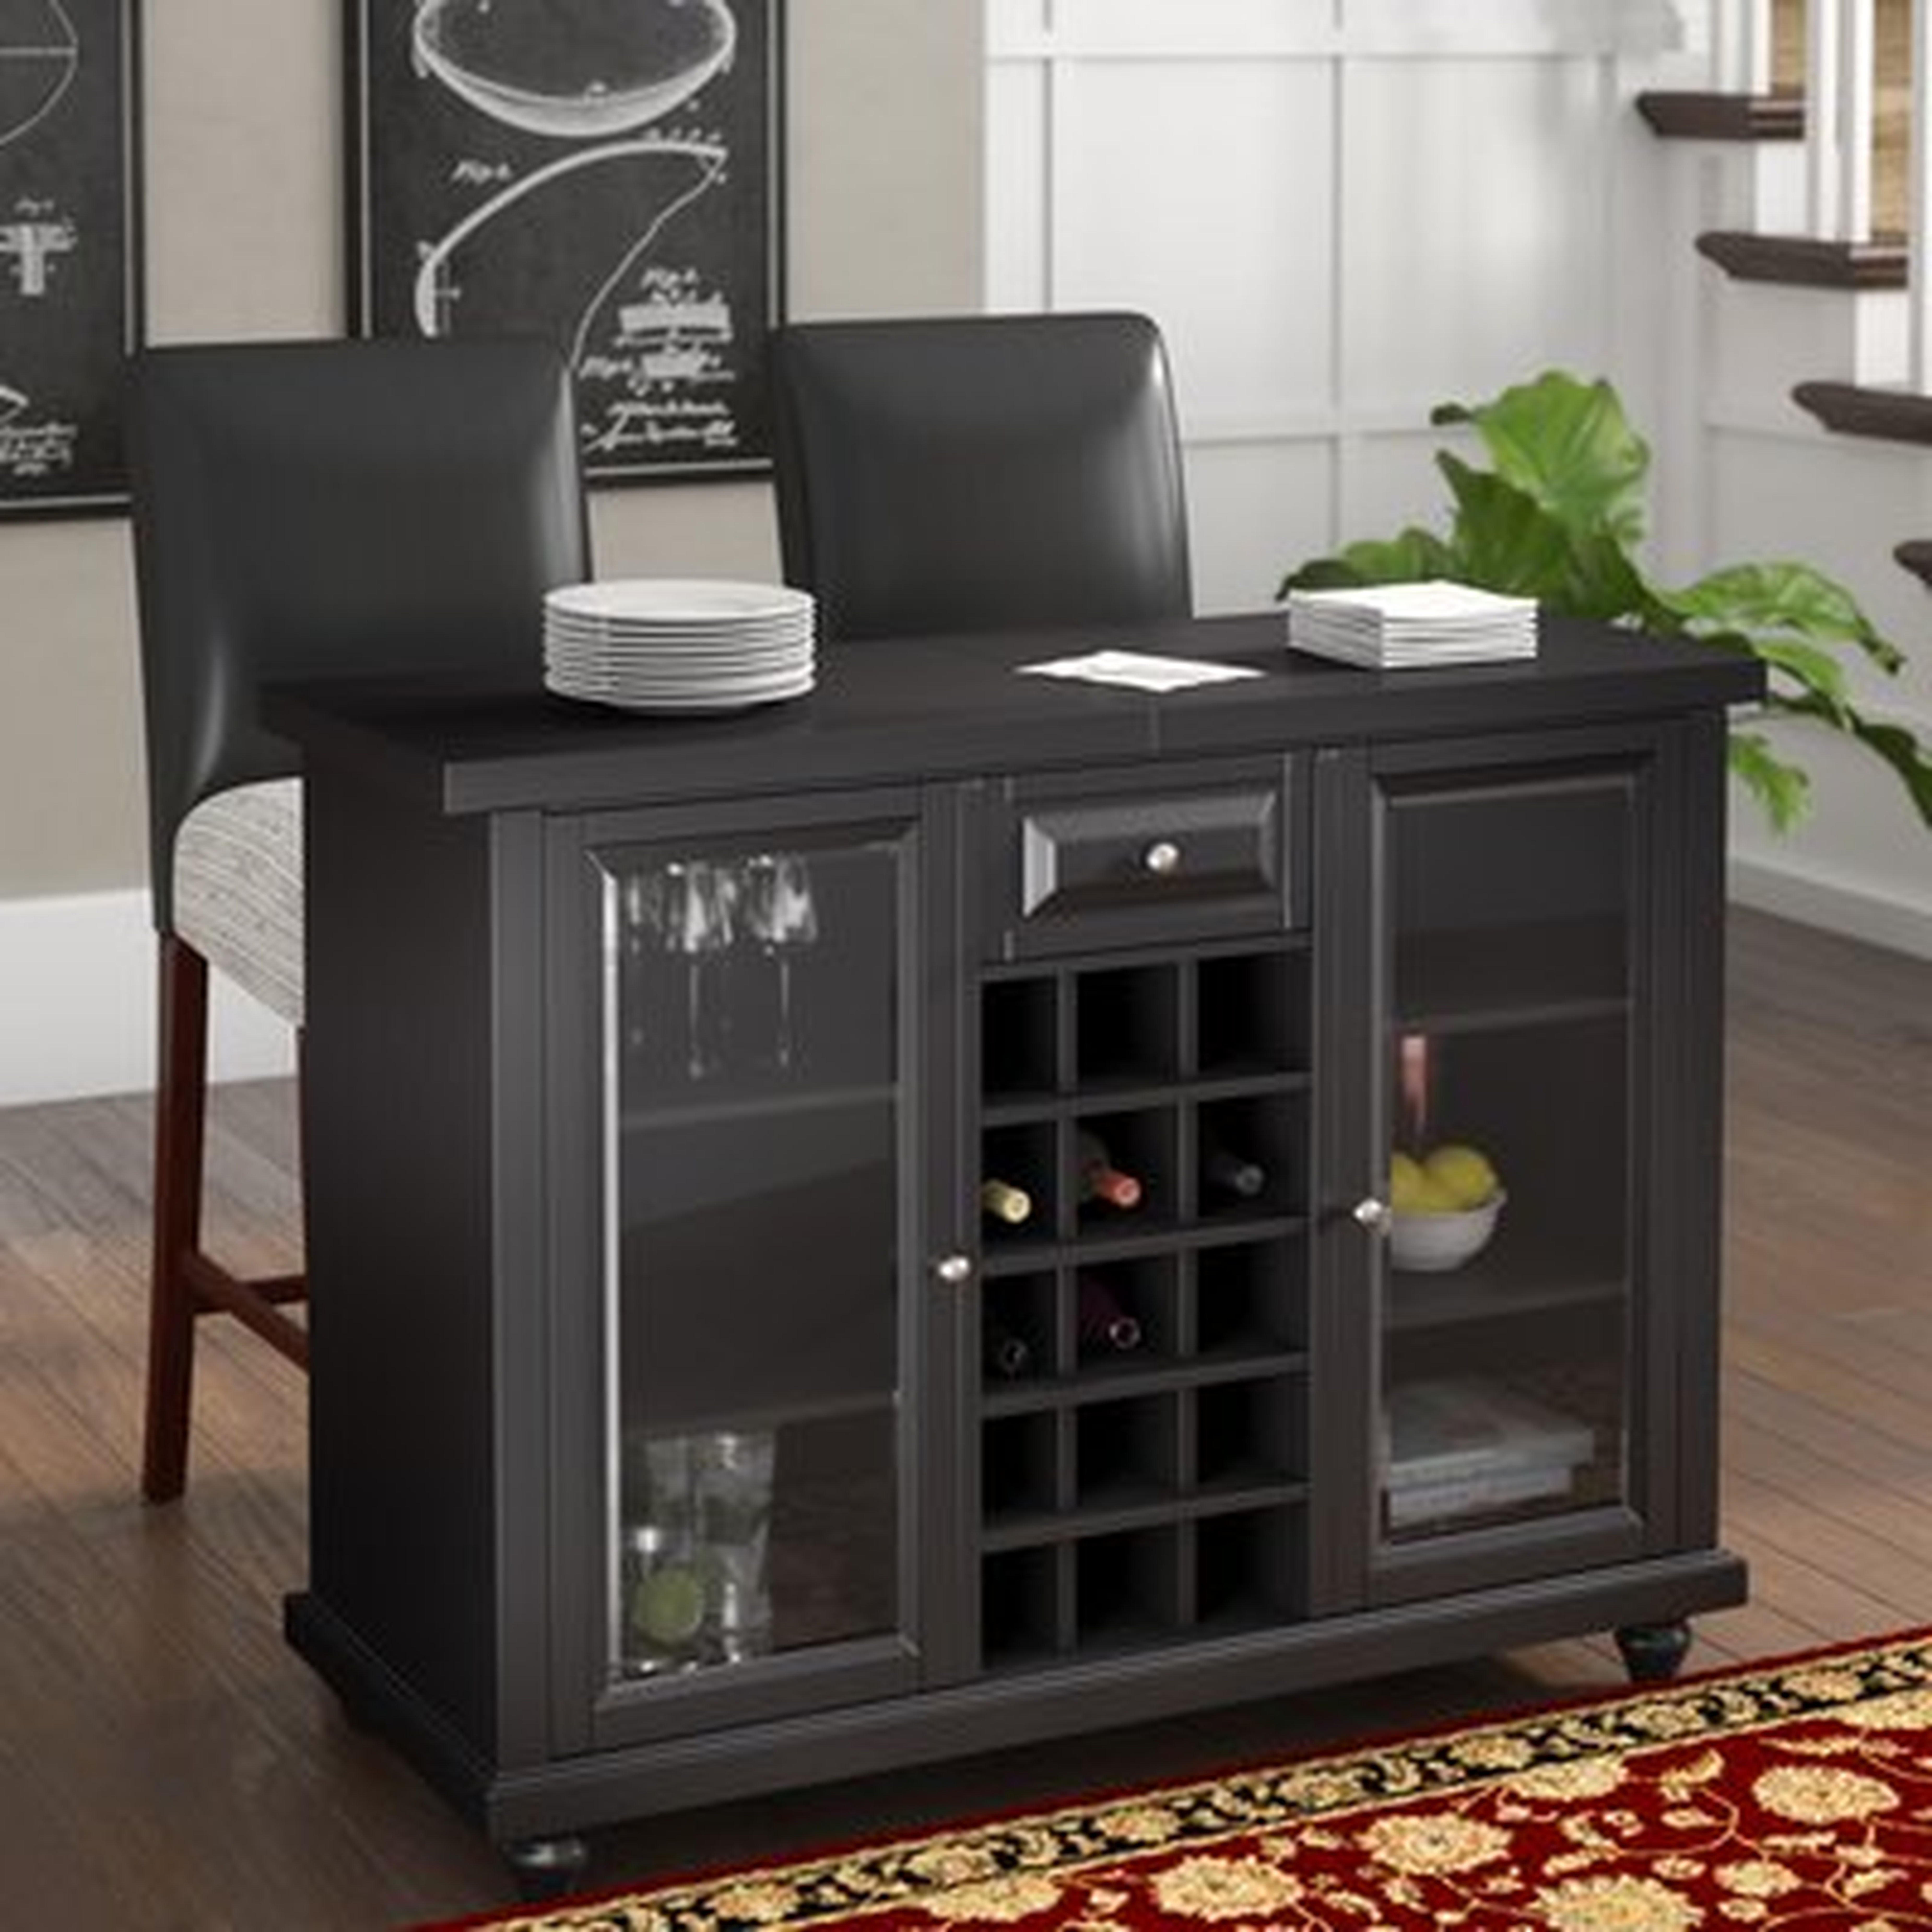 Hedon Bar Cabinet with Wine Storage - Wayfair